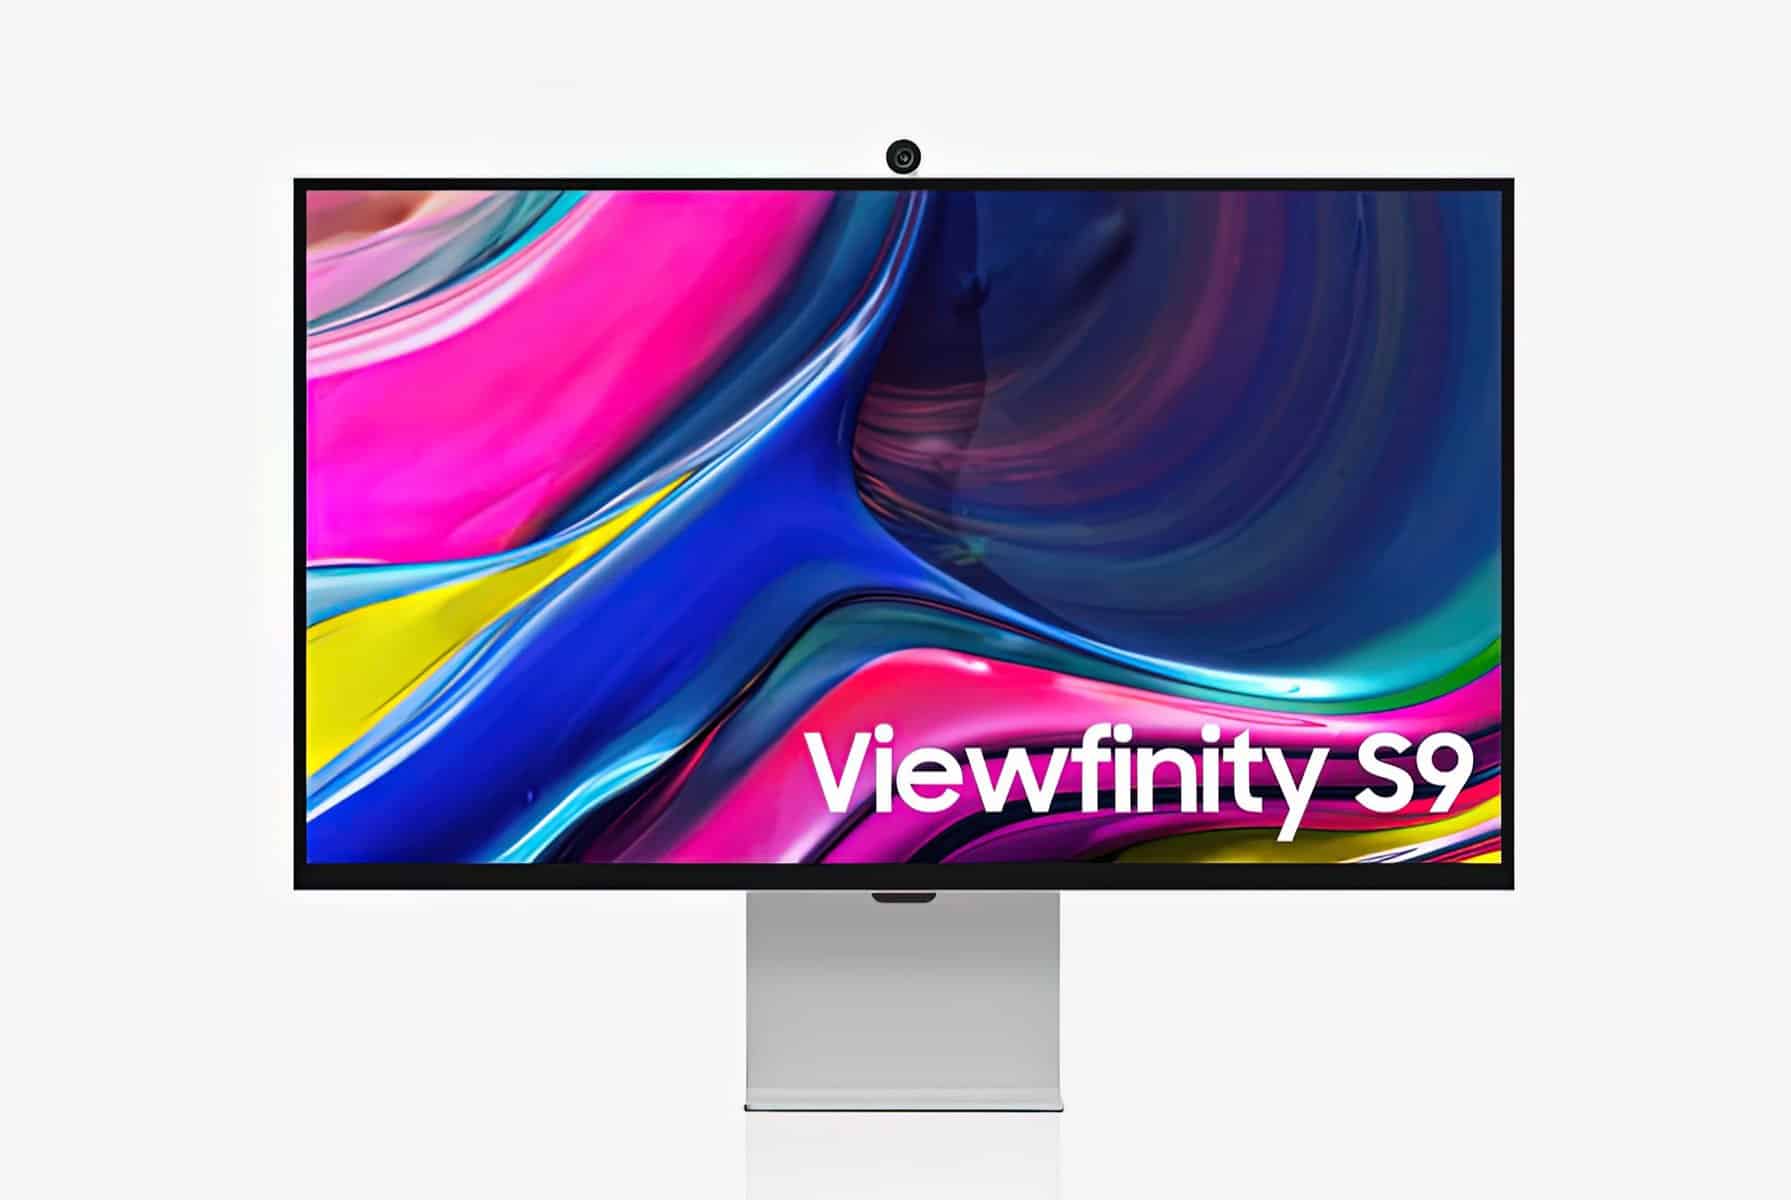 Samsung ViewFinity S9 release window prediction